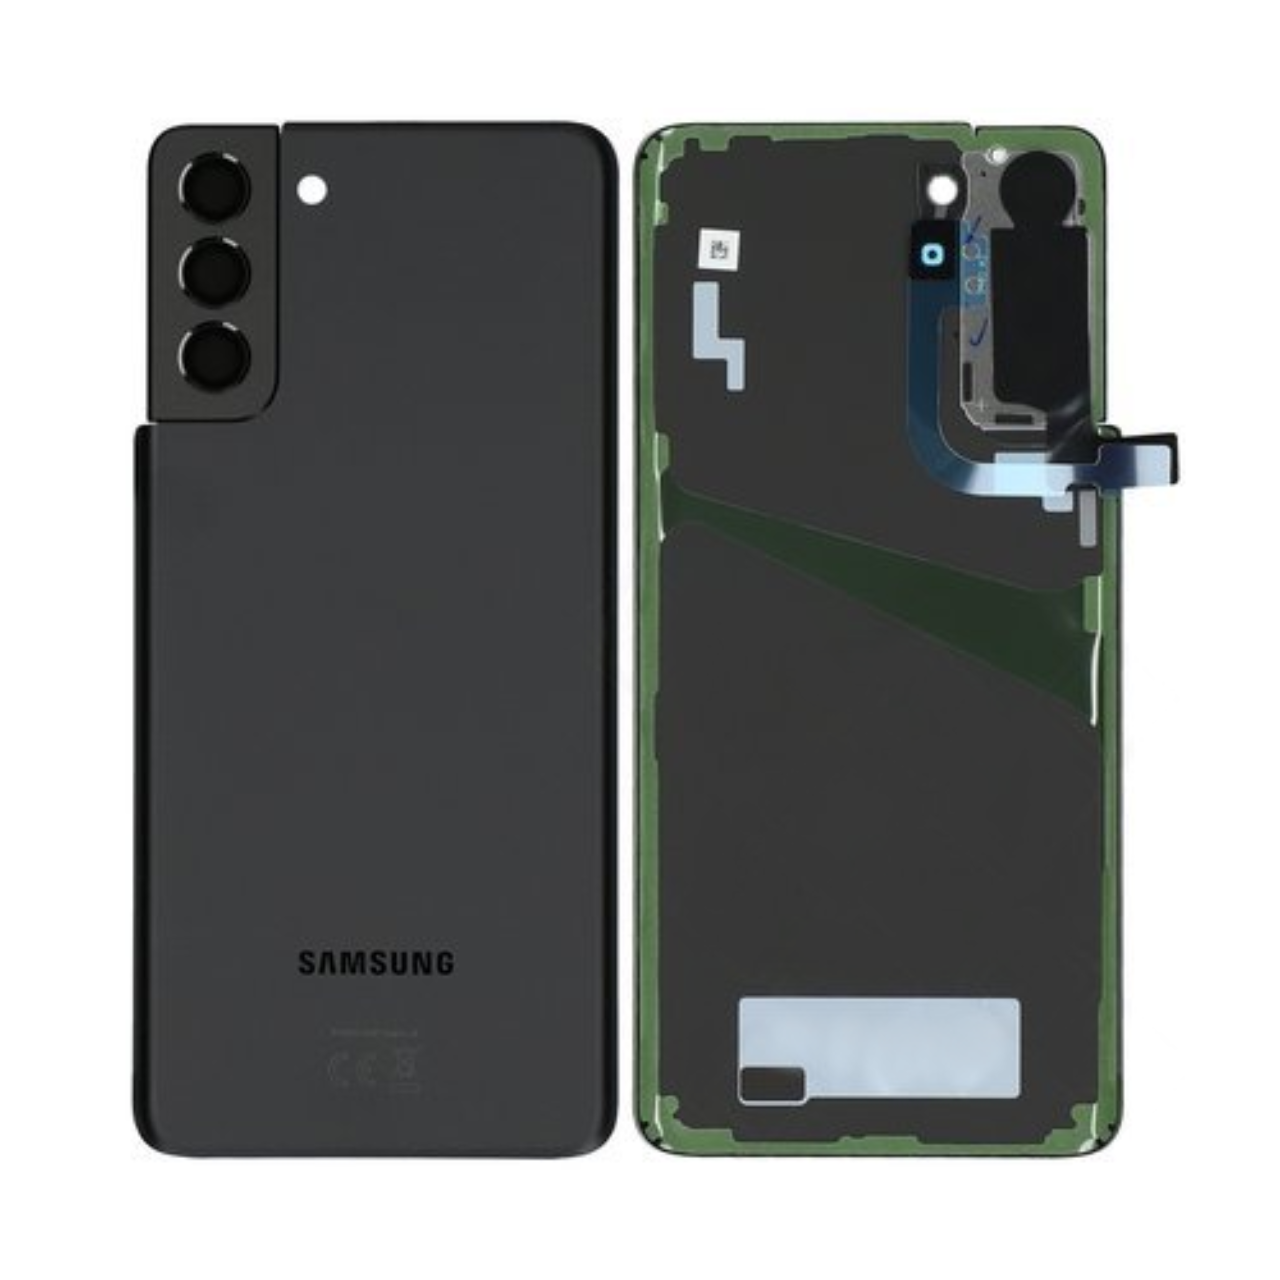 Samsung Galaxy S21 Plus battery cover S21 Plus 5 G GH82 24505 A